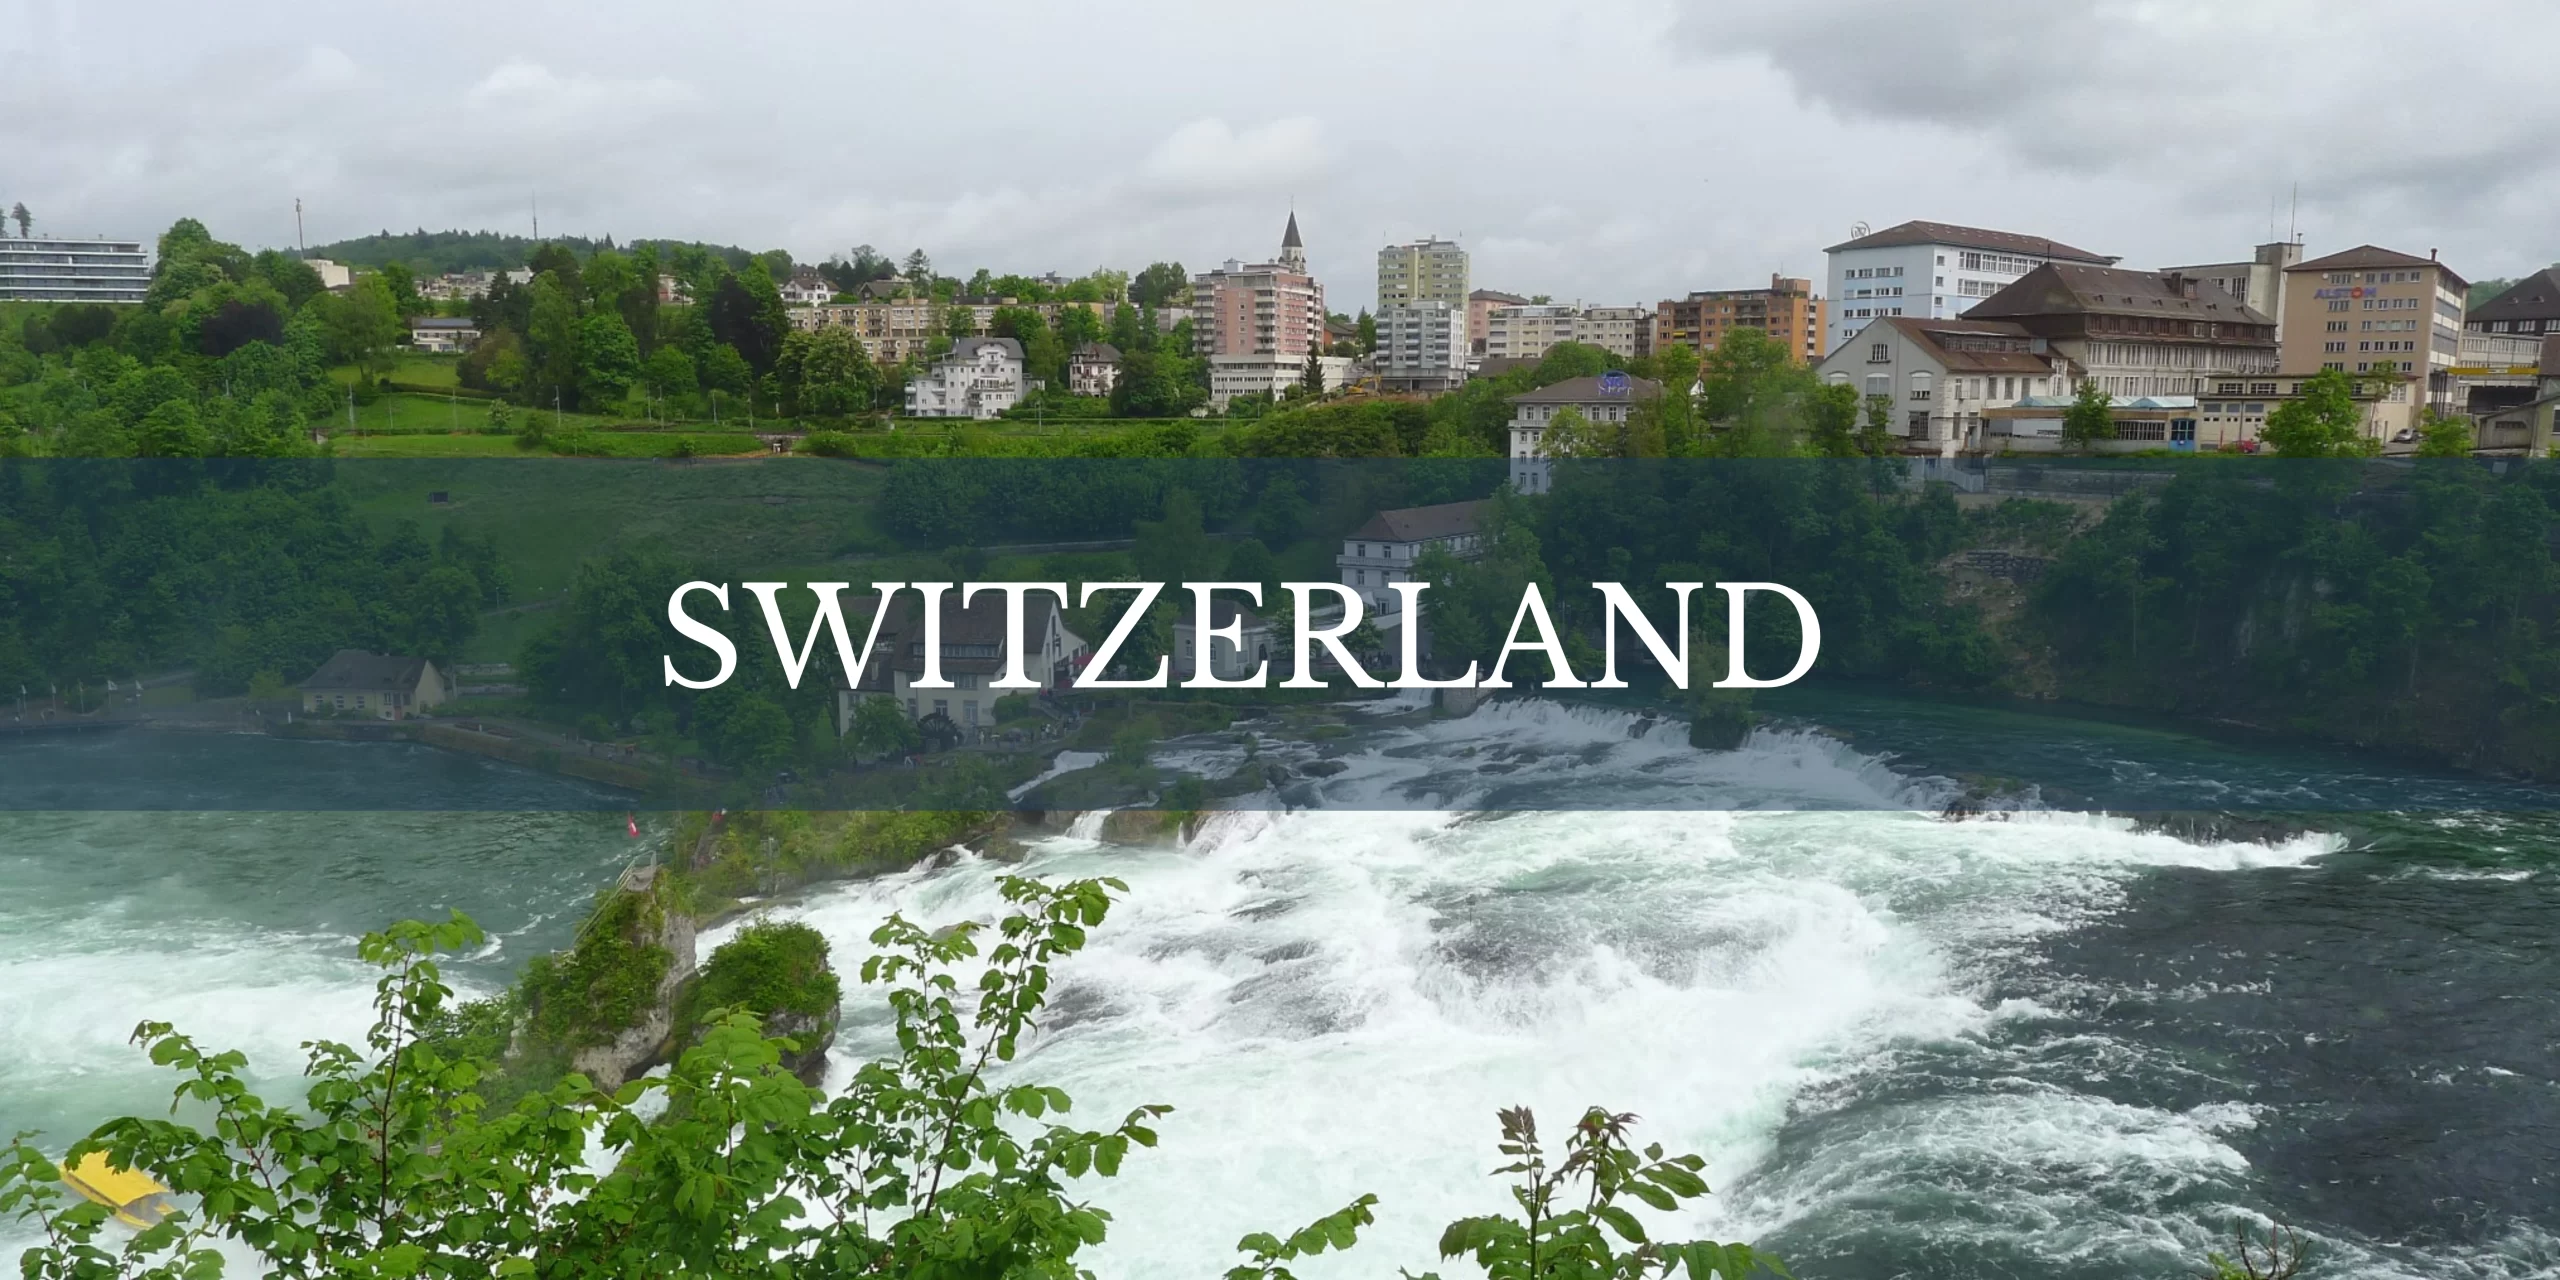 Let me describe Switzerland through 5 senses